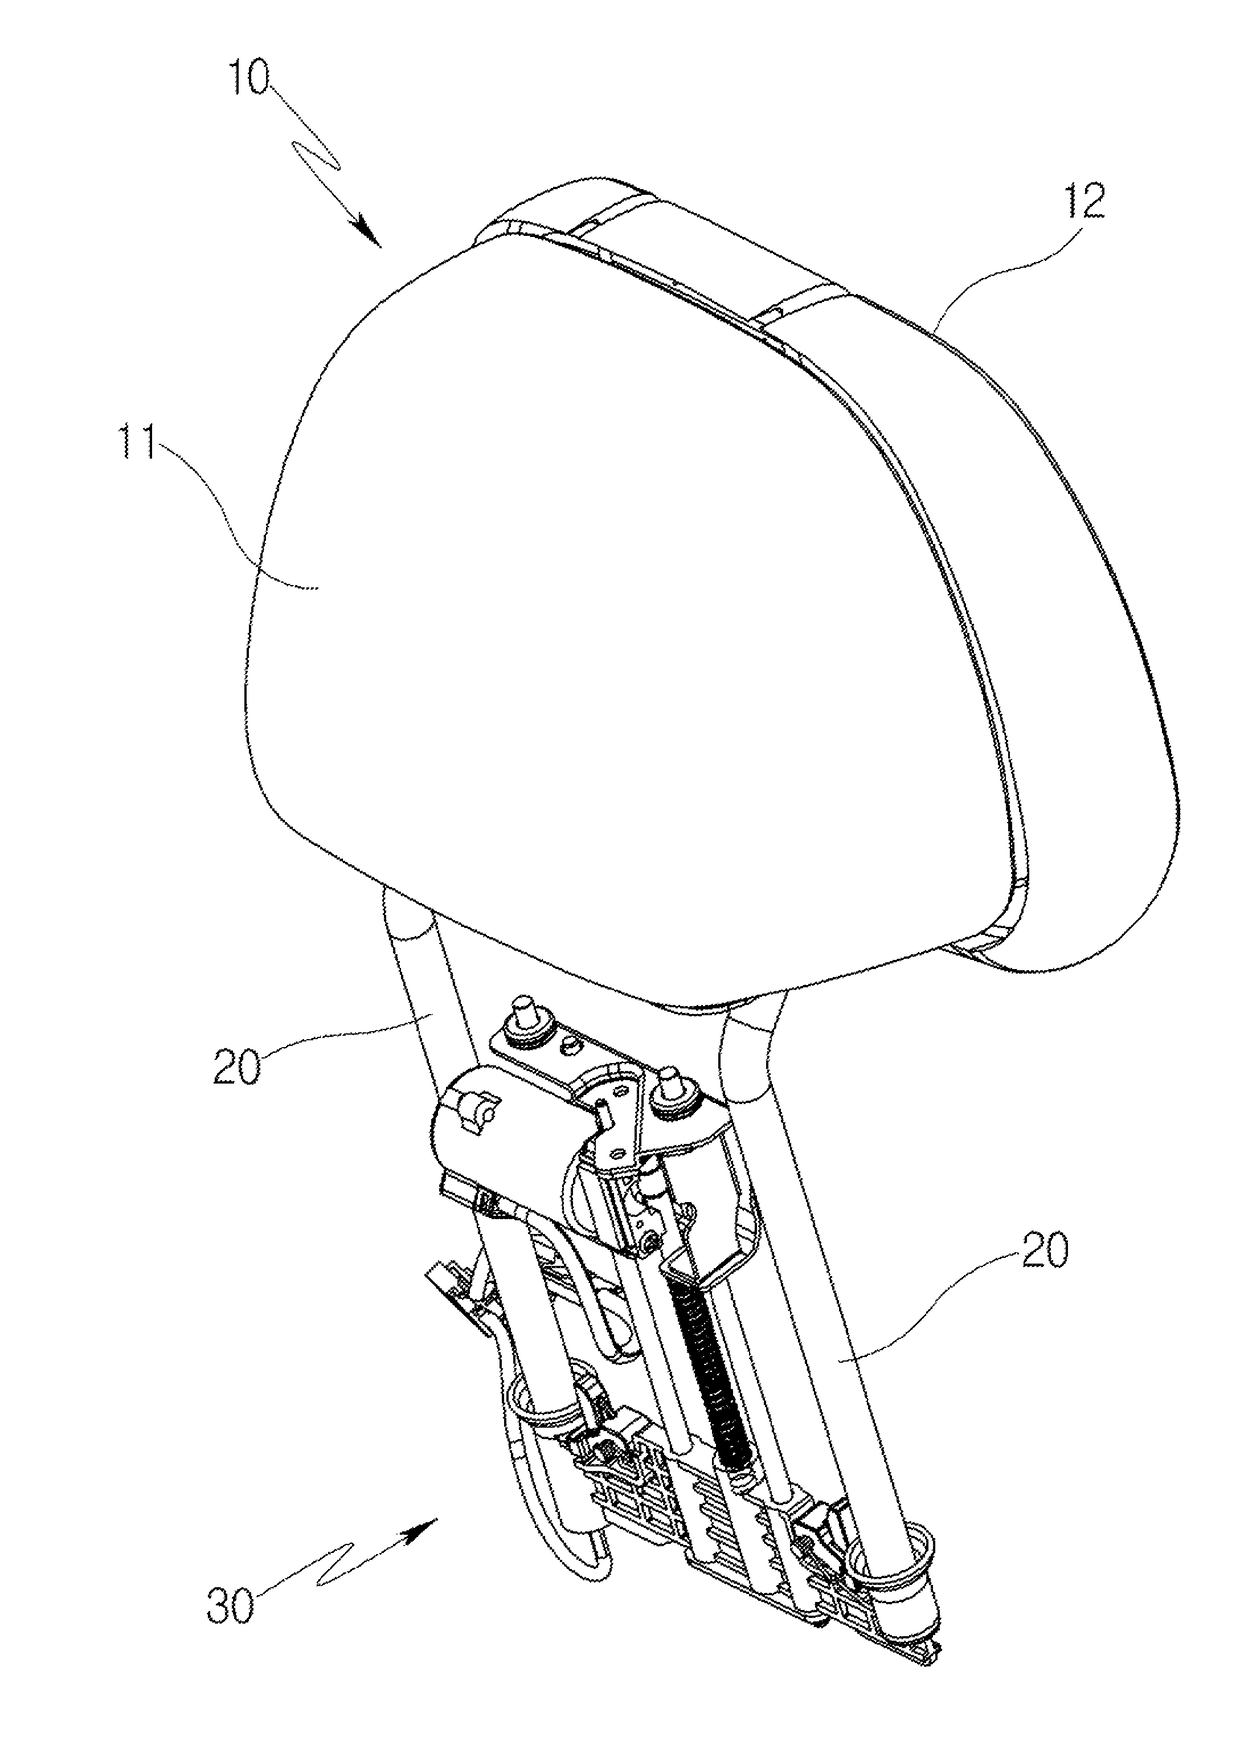 Power headrest apparatus